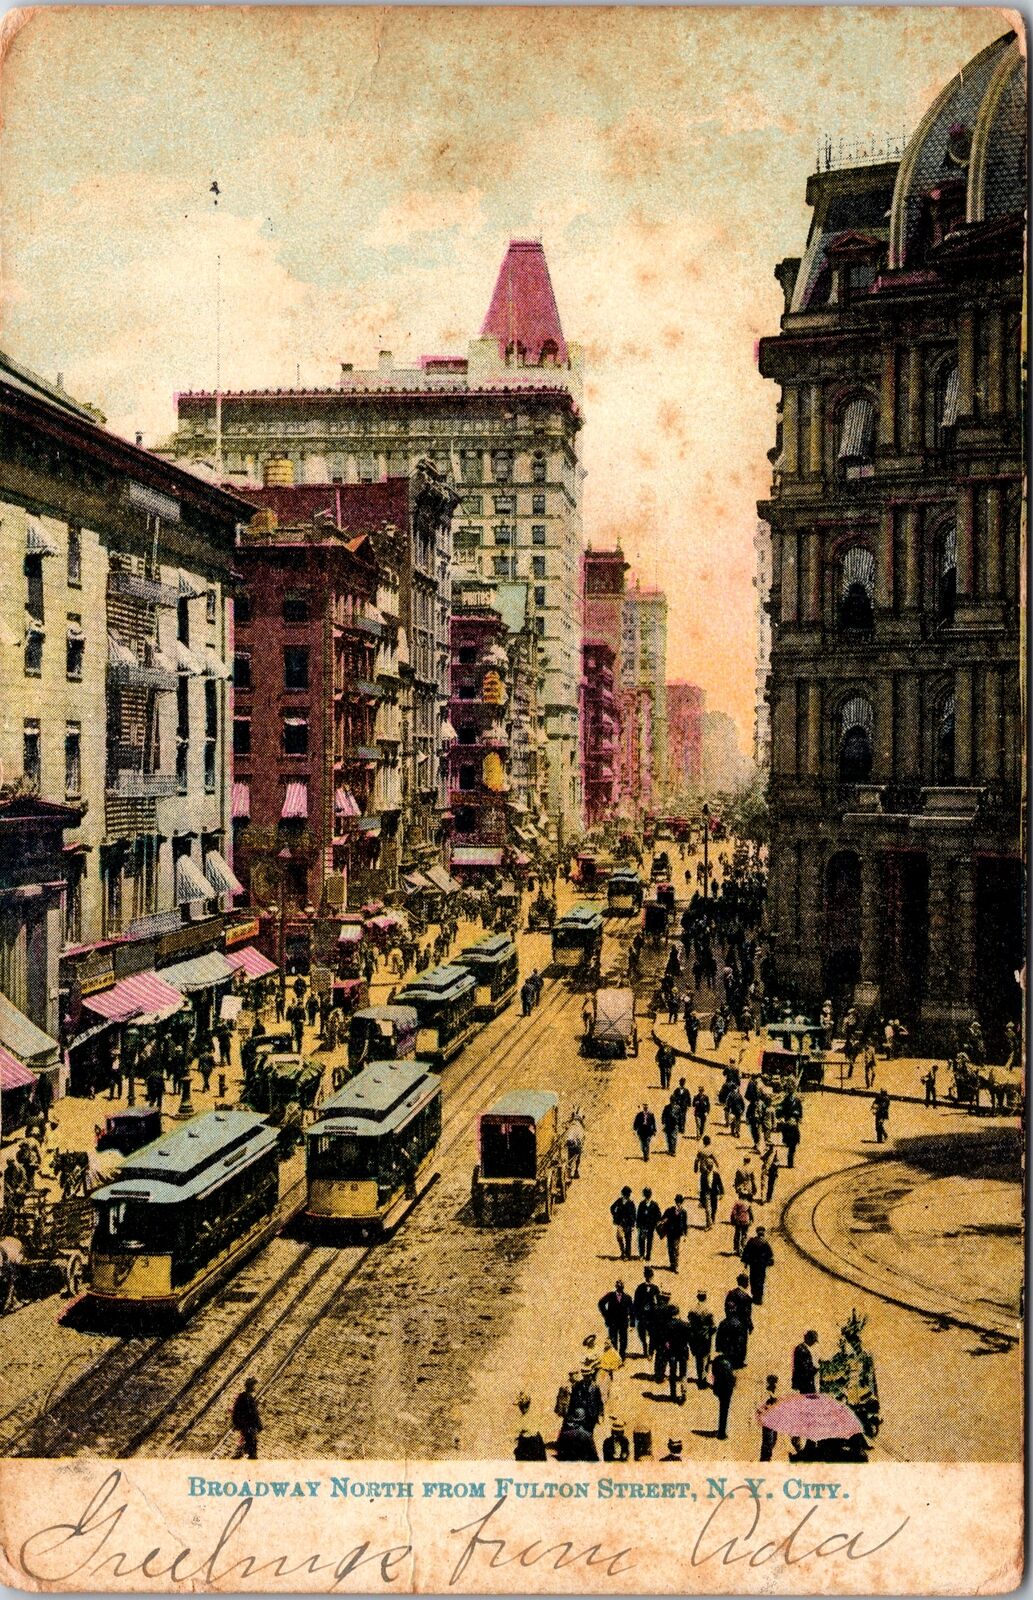 VINTAGE POSTCARD STREET SCENE VIEW OF BROADWAY FROM FULTON SQUARE N.Y.C. c. 1905